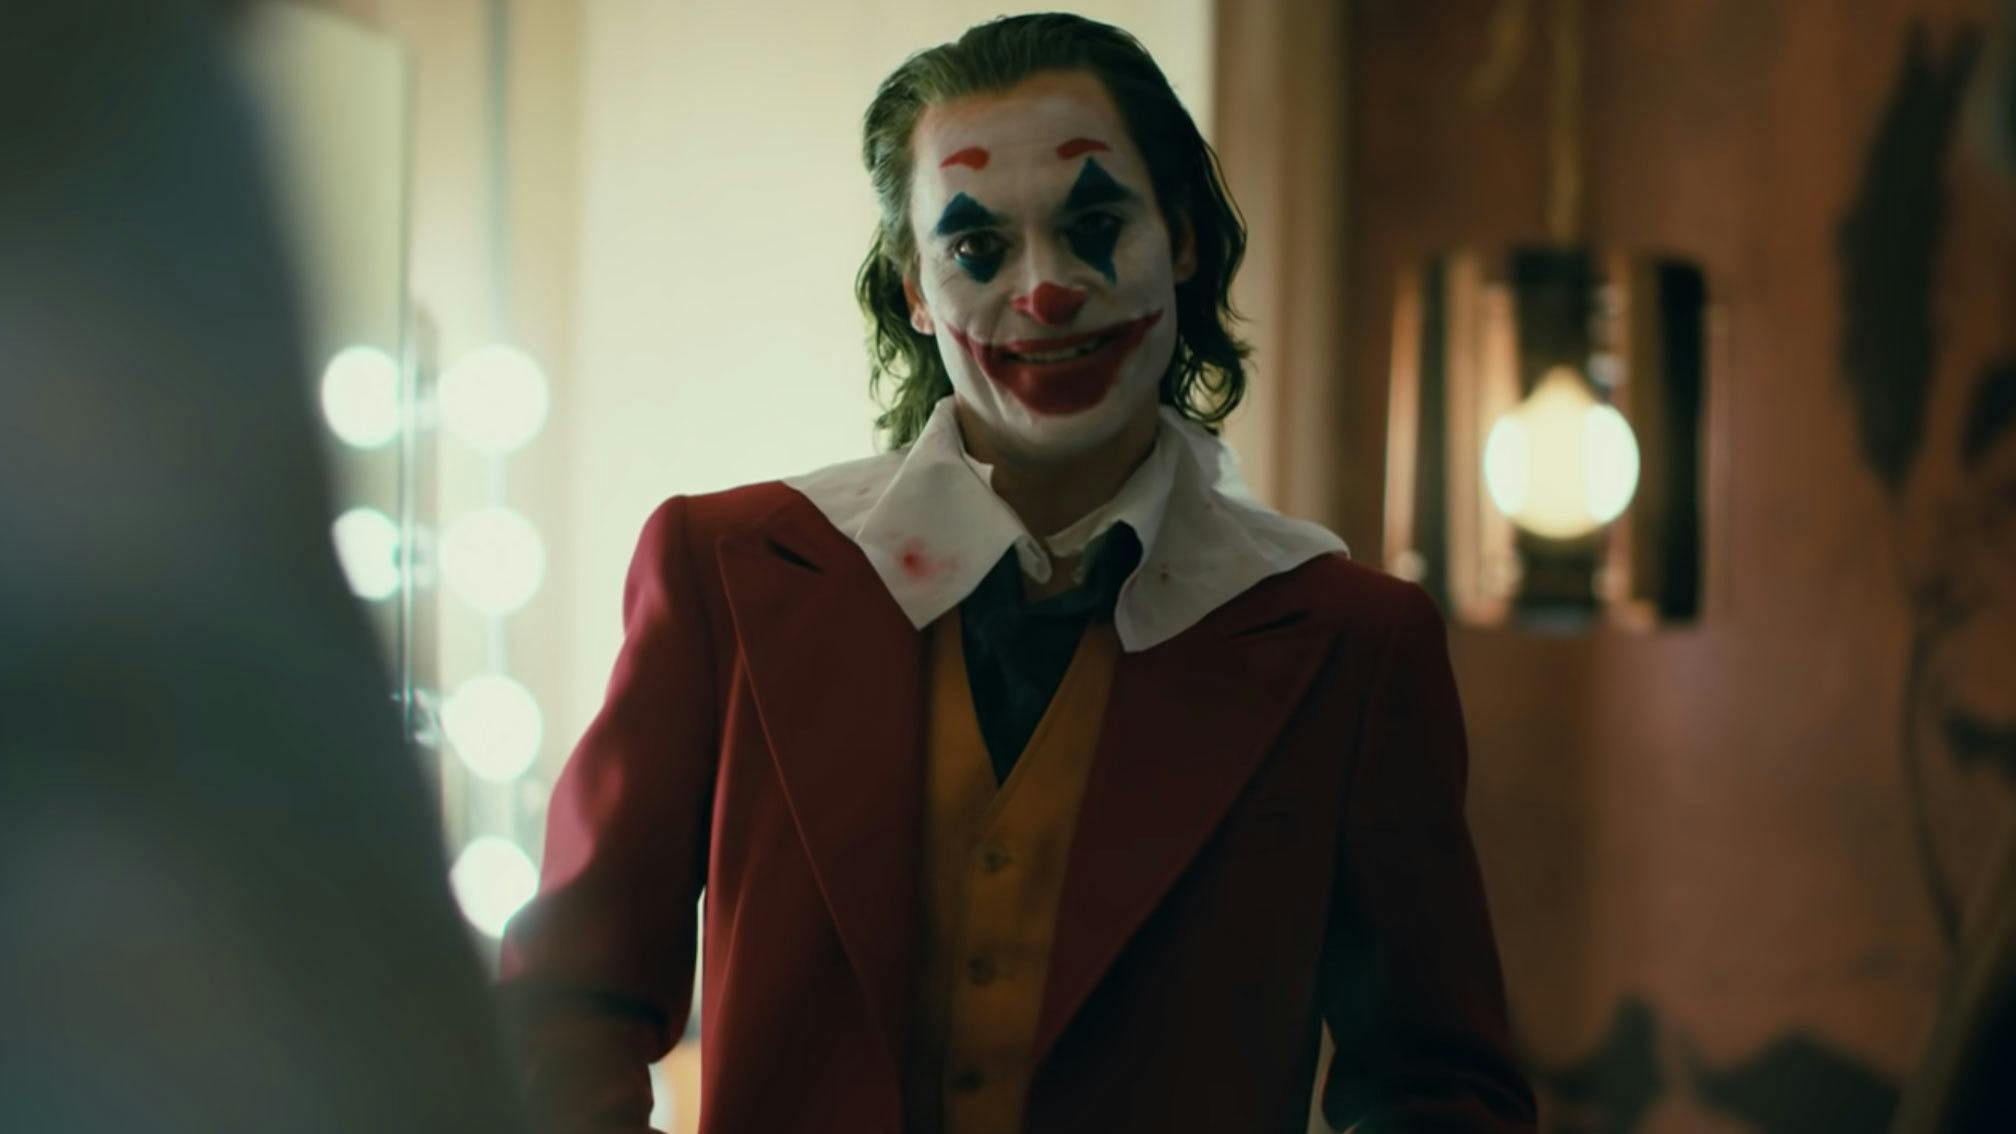 Fall Out Boy fans, rejoice! The Joker sequel will be called Folie à Deux